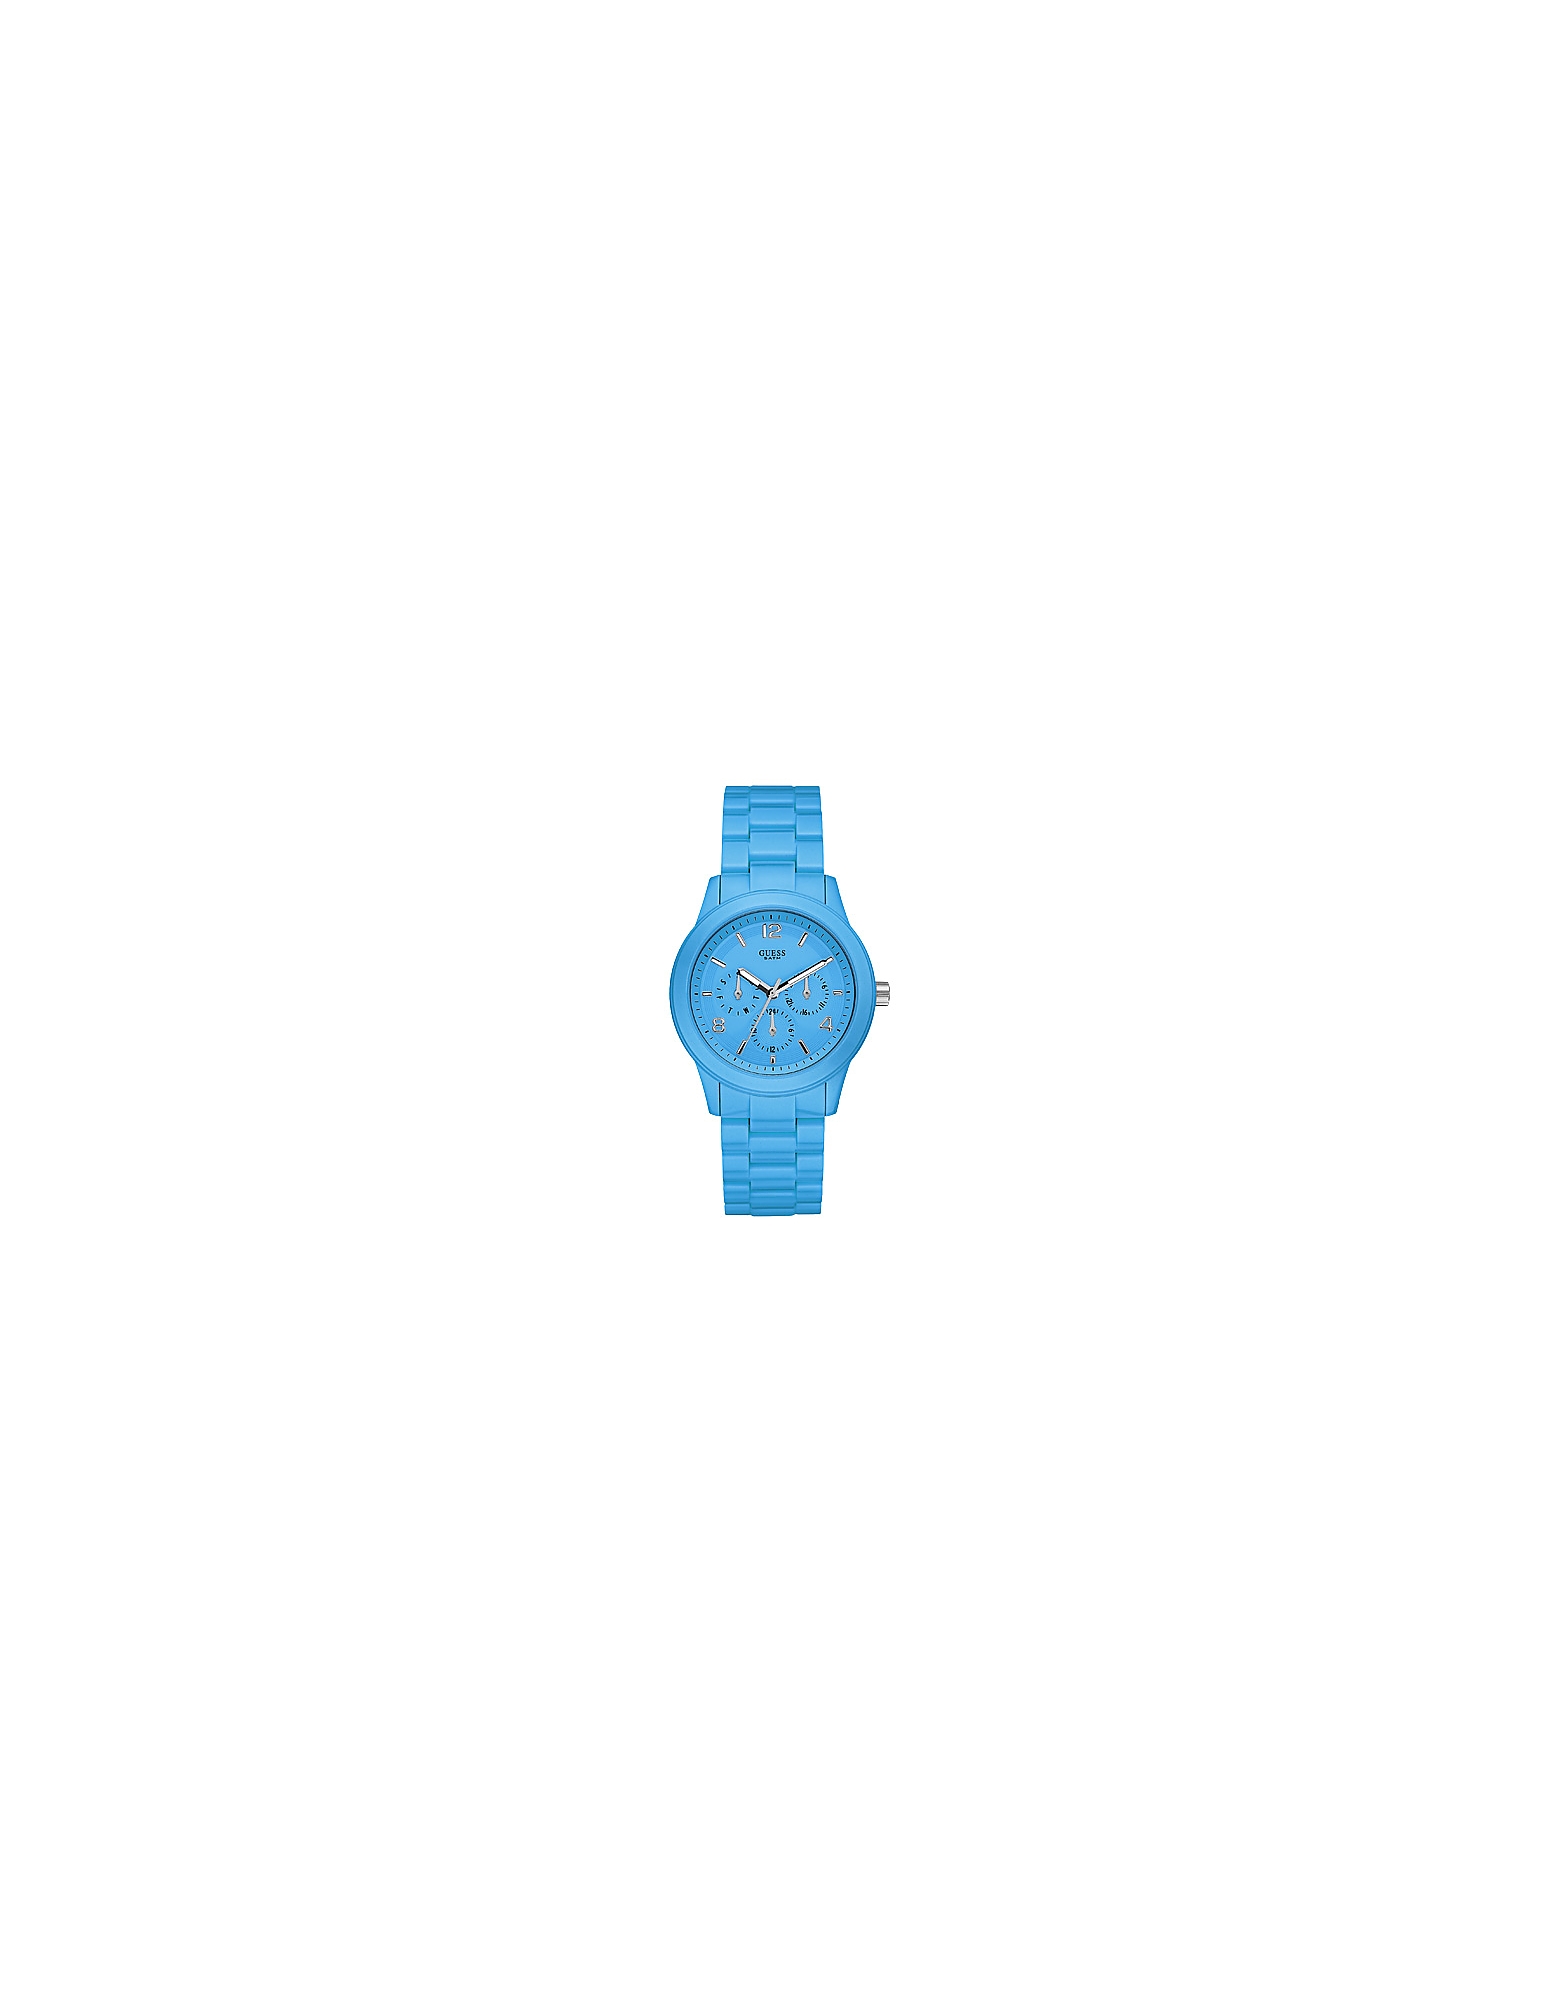 Guess Designer Women's Watches Women's Quartz Analogue Watch In Bleu